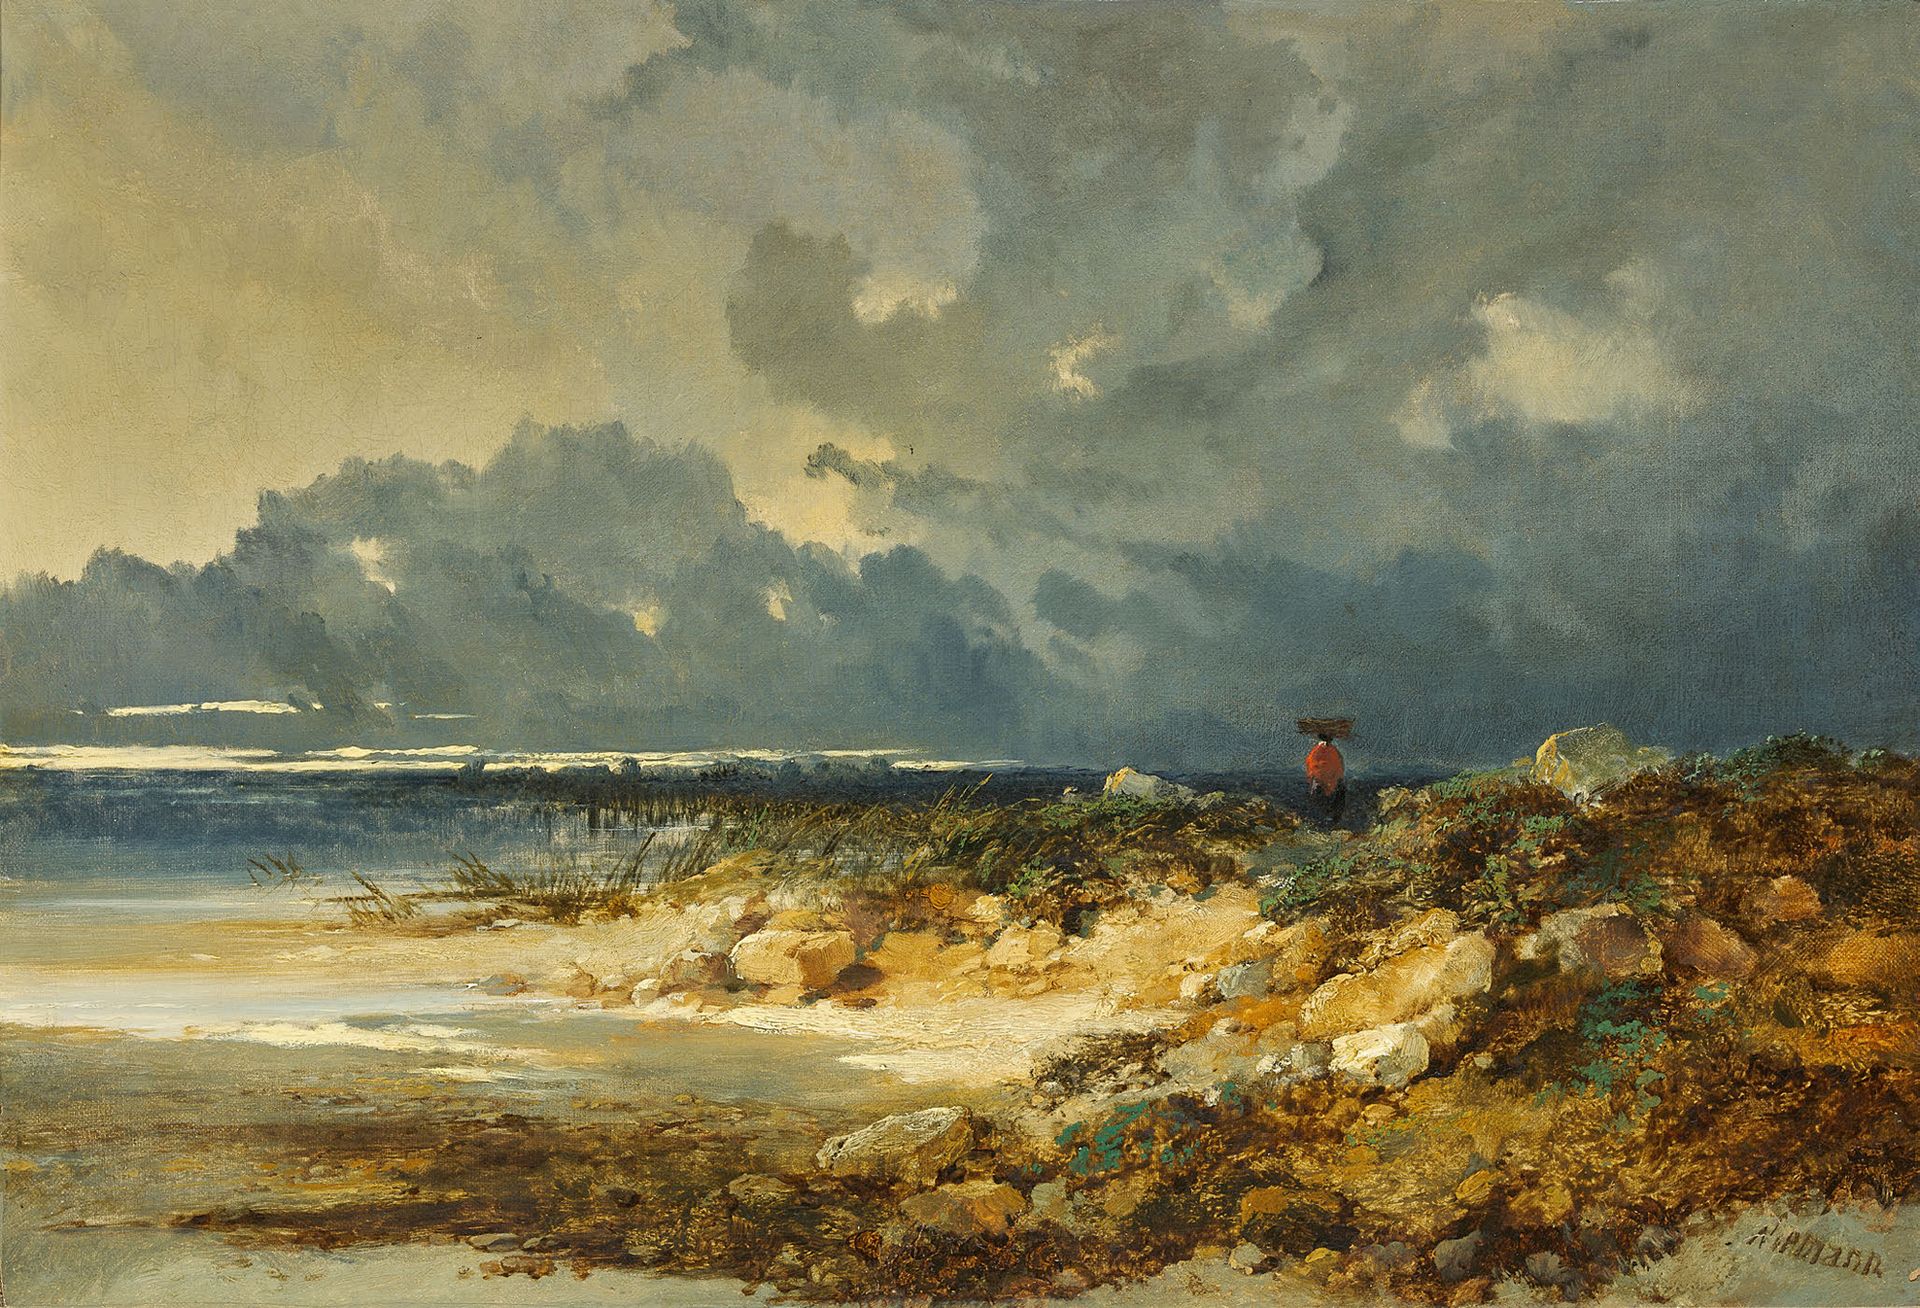 EDMUND JOHN NIEMANN LONDRES, 1813 - 1876 Seaside
Oil on canvas
Signed lower righ&hellip;